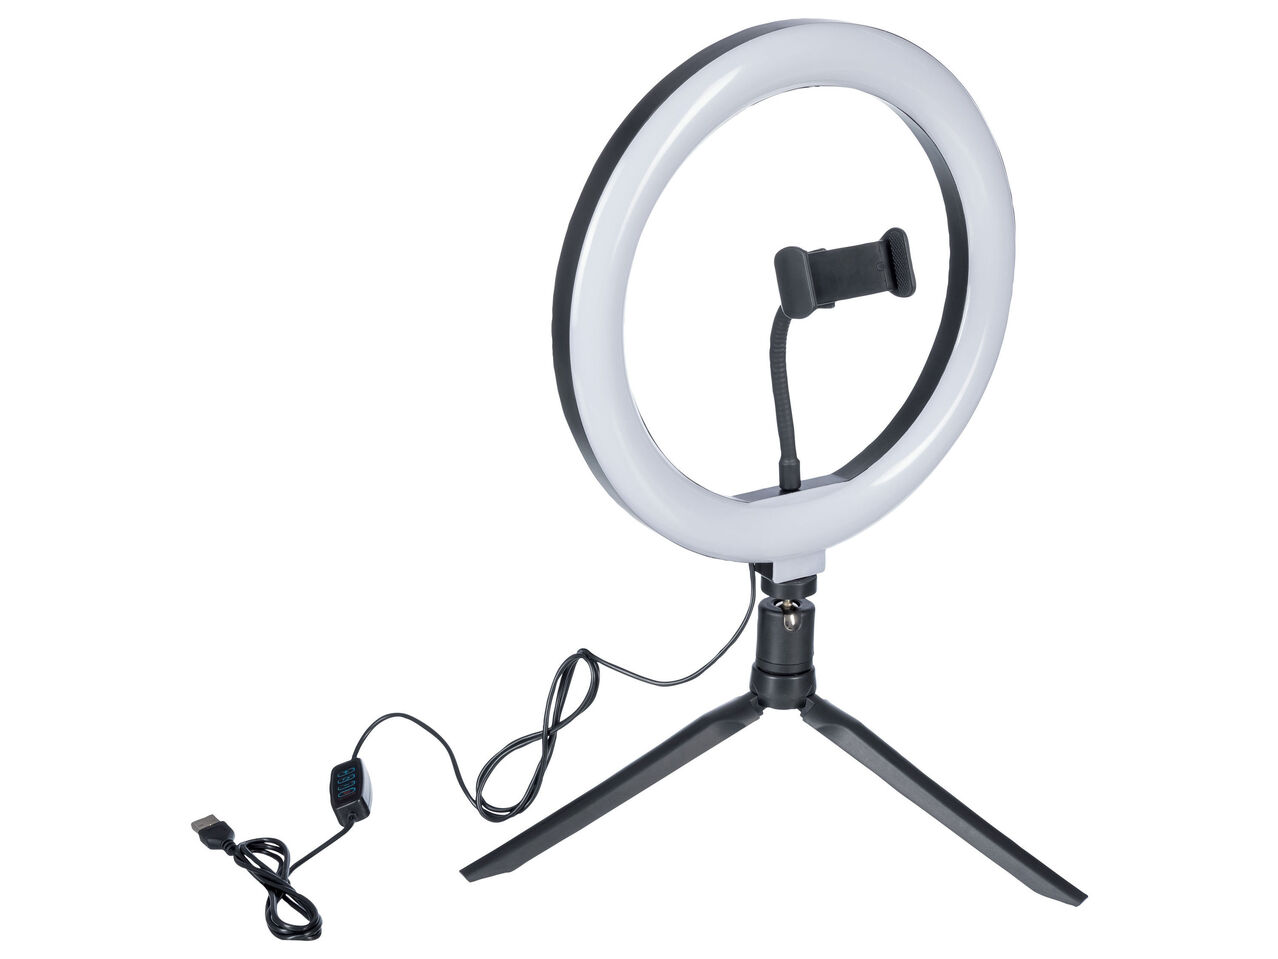 LIVARNO HOME® Lampa pierścieniowa LED do selfie , cena 49,99 PLN 

- 3-stopniowa ...